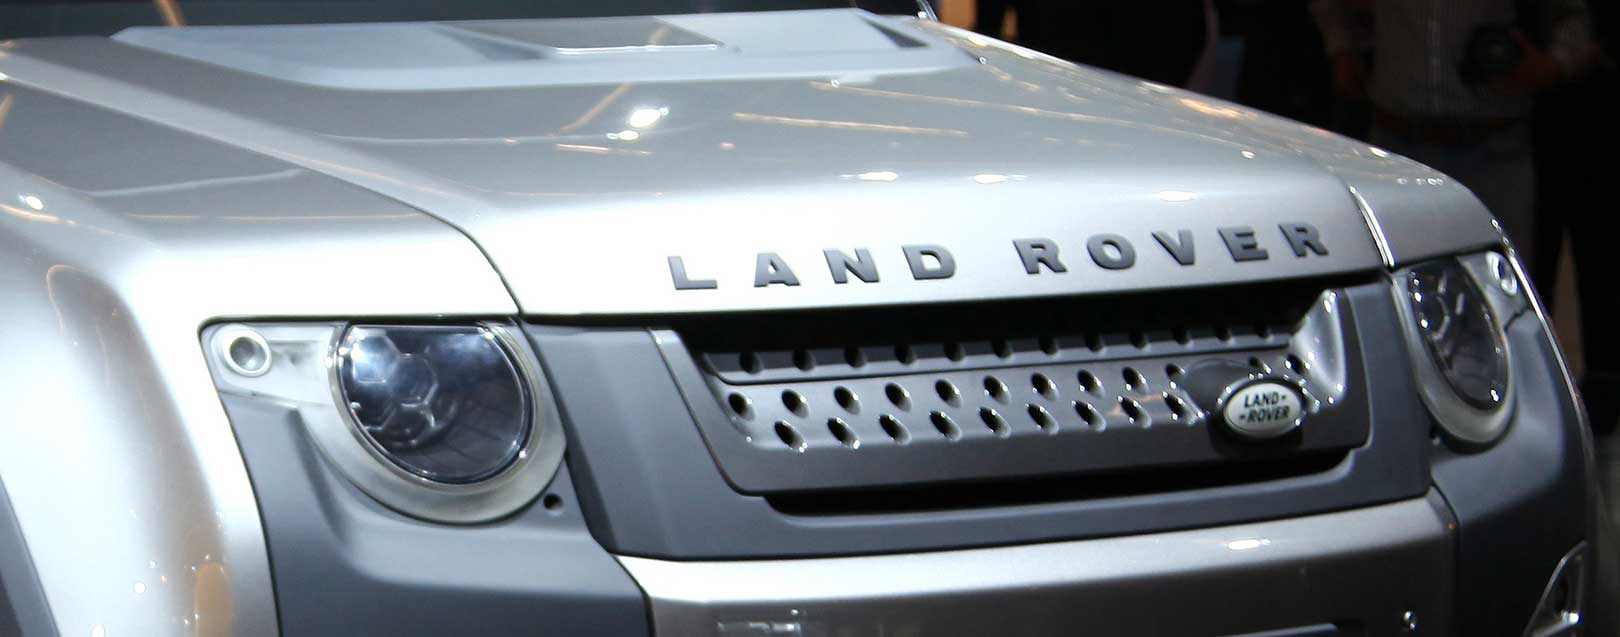 Jaguar Land Rover plans to invest £3.75bn in FY17